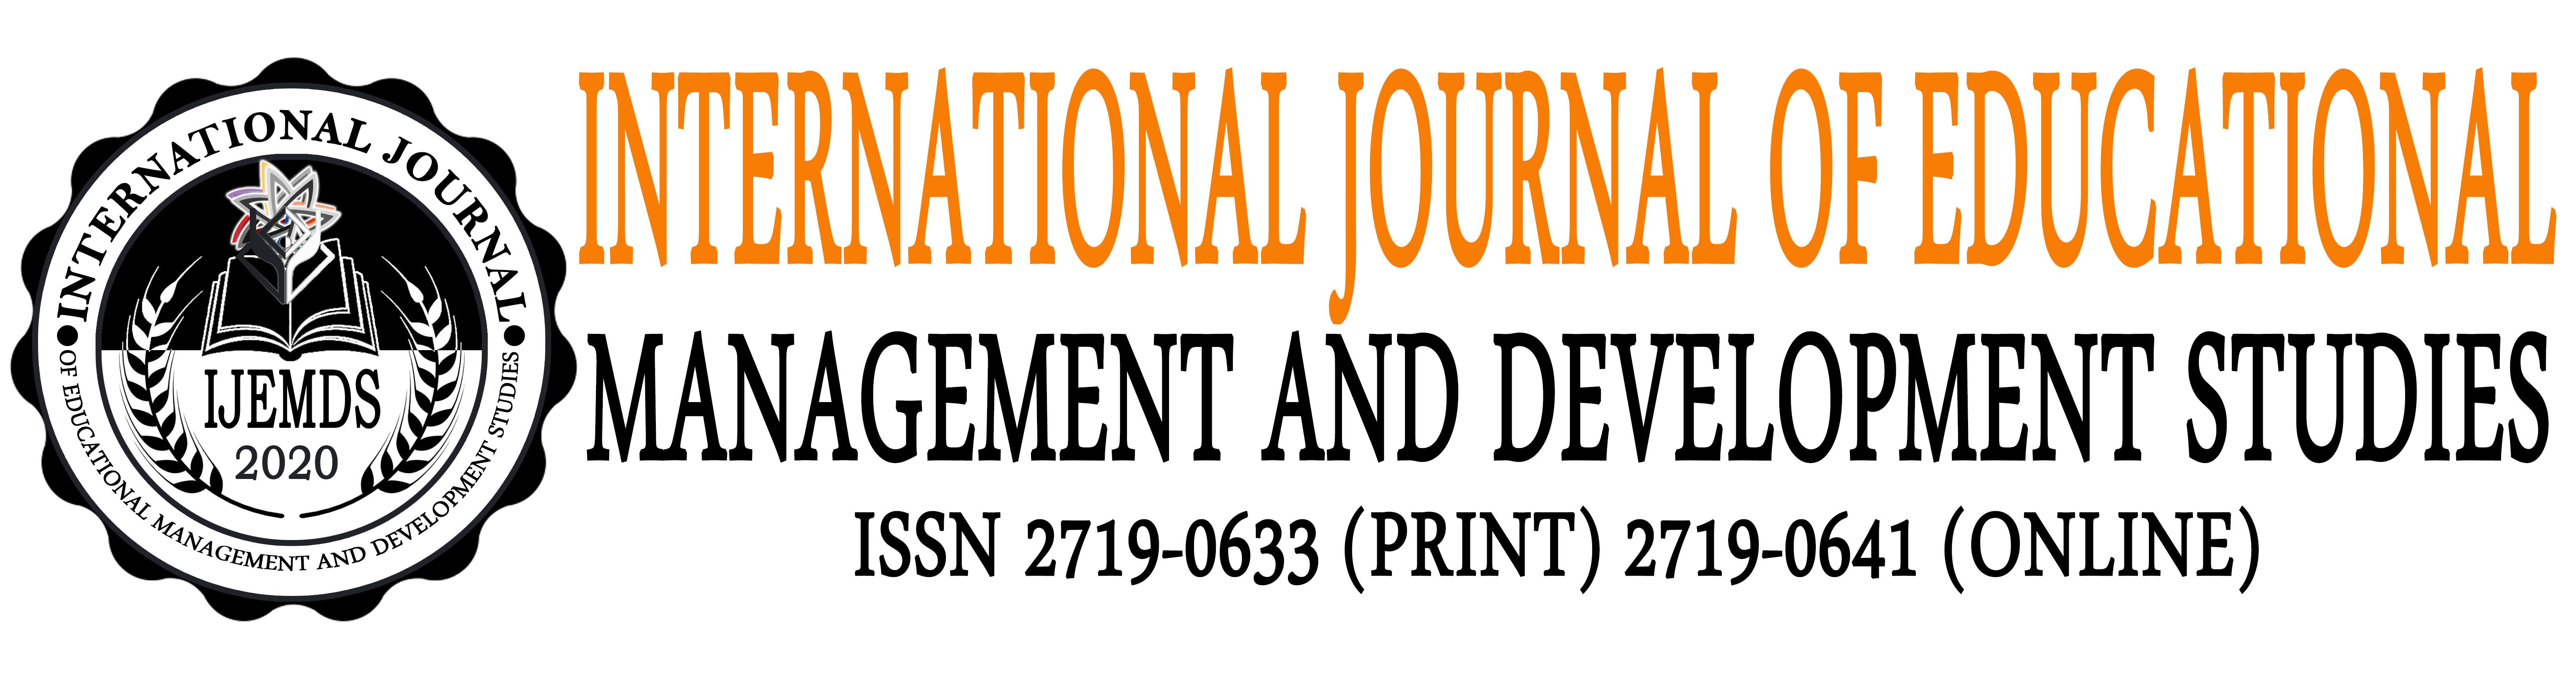 international journal of educational management